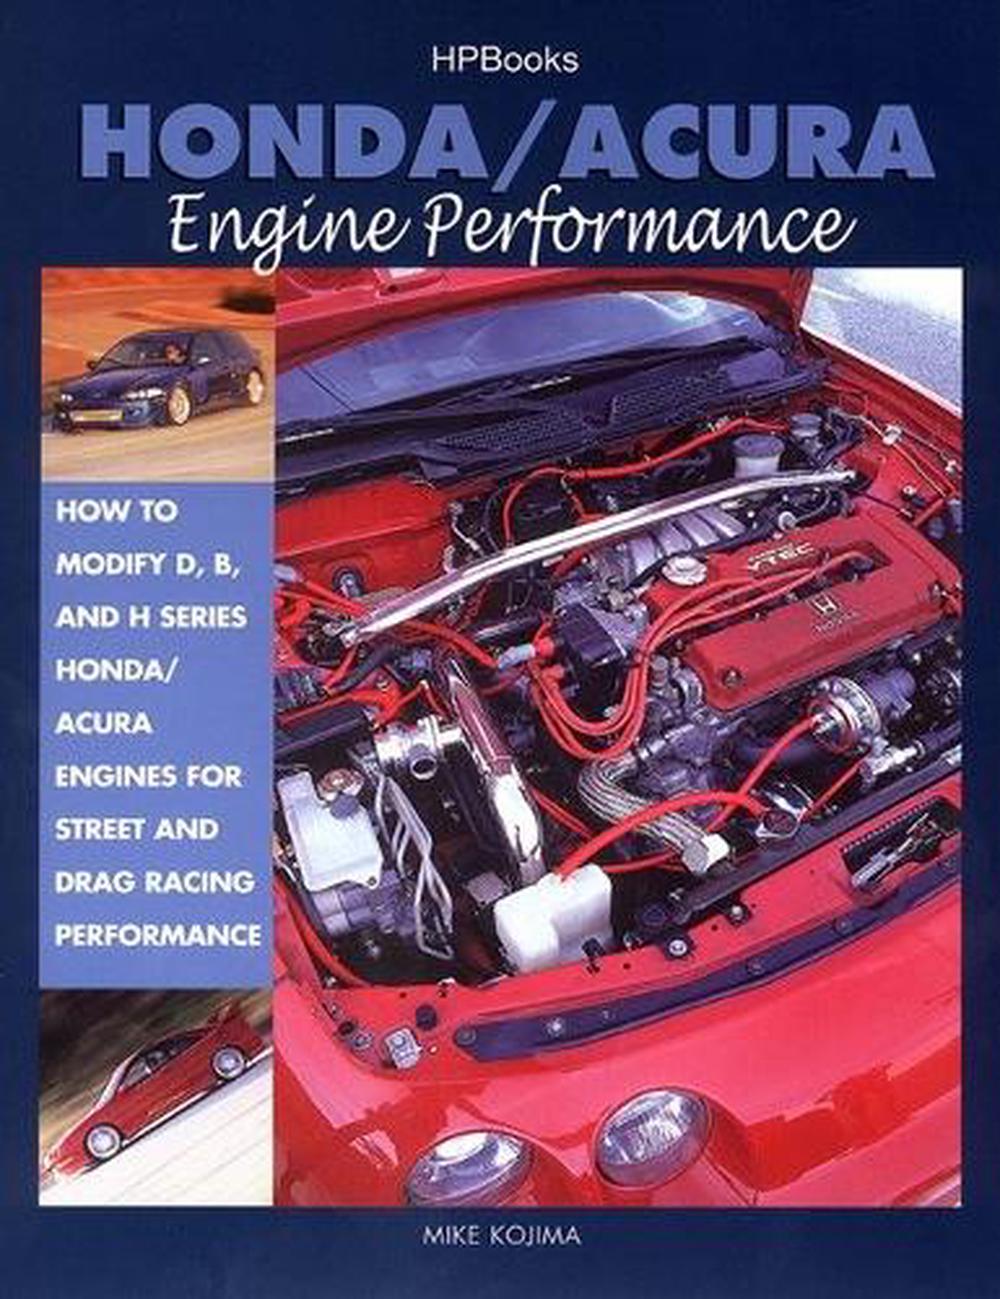 Honda/Acura Engine Performance Hp1384 How to Modify D, B and H Series Honda/Acu 9781557883841